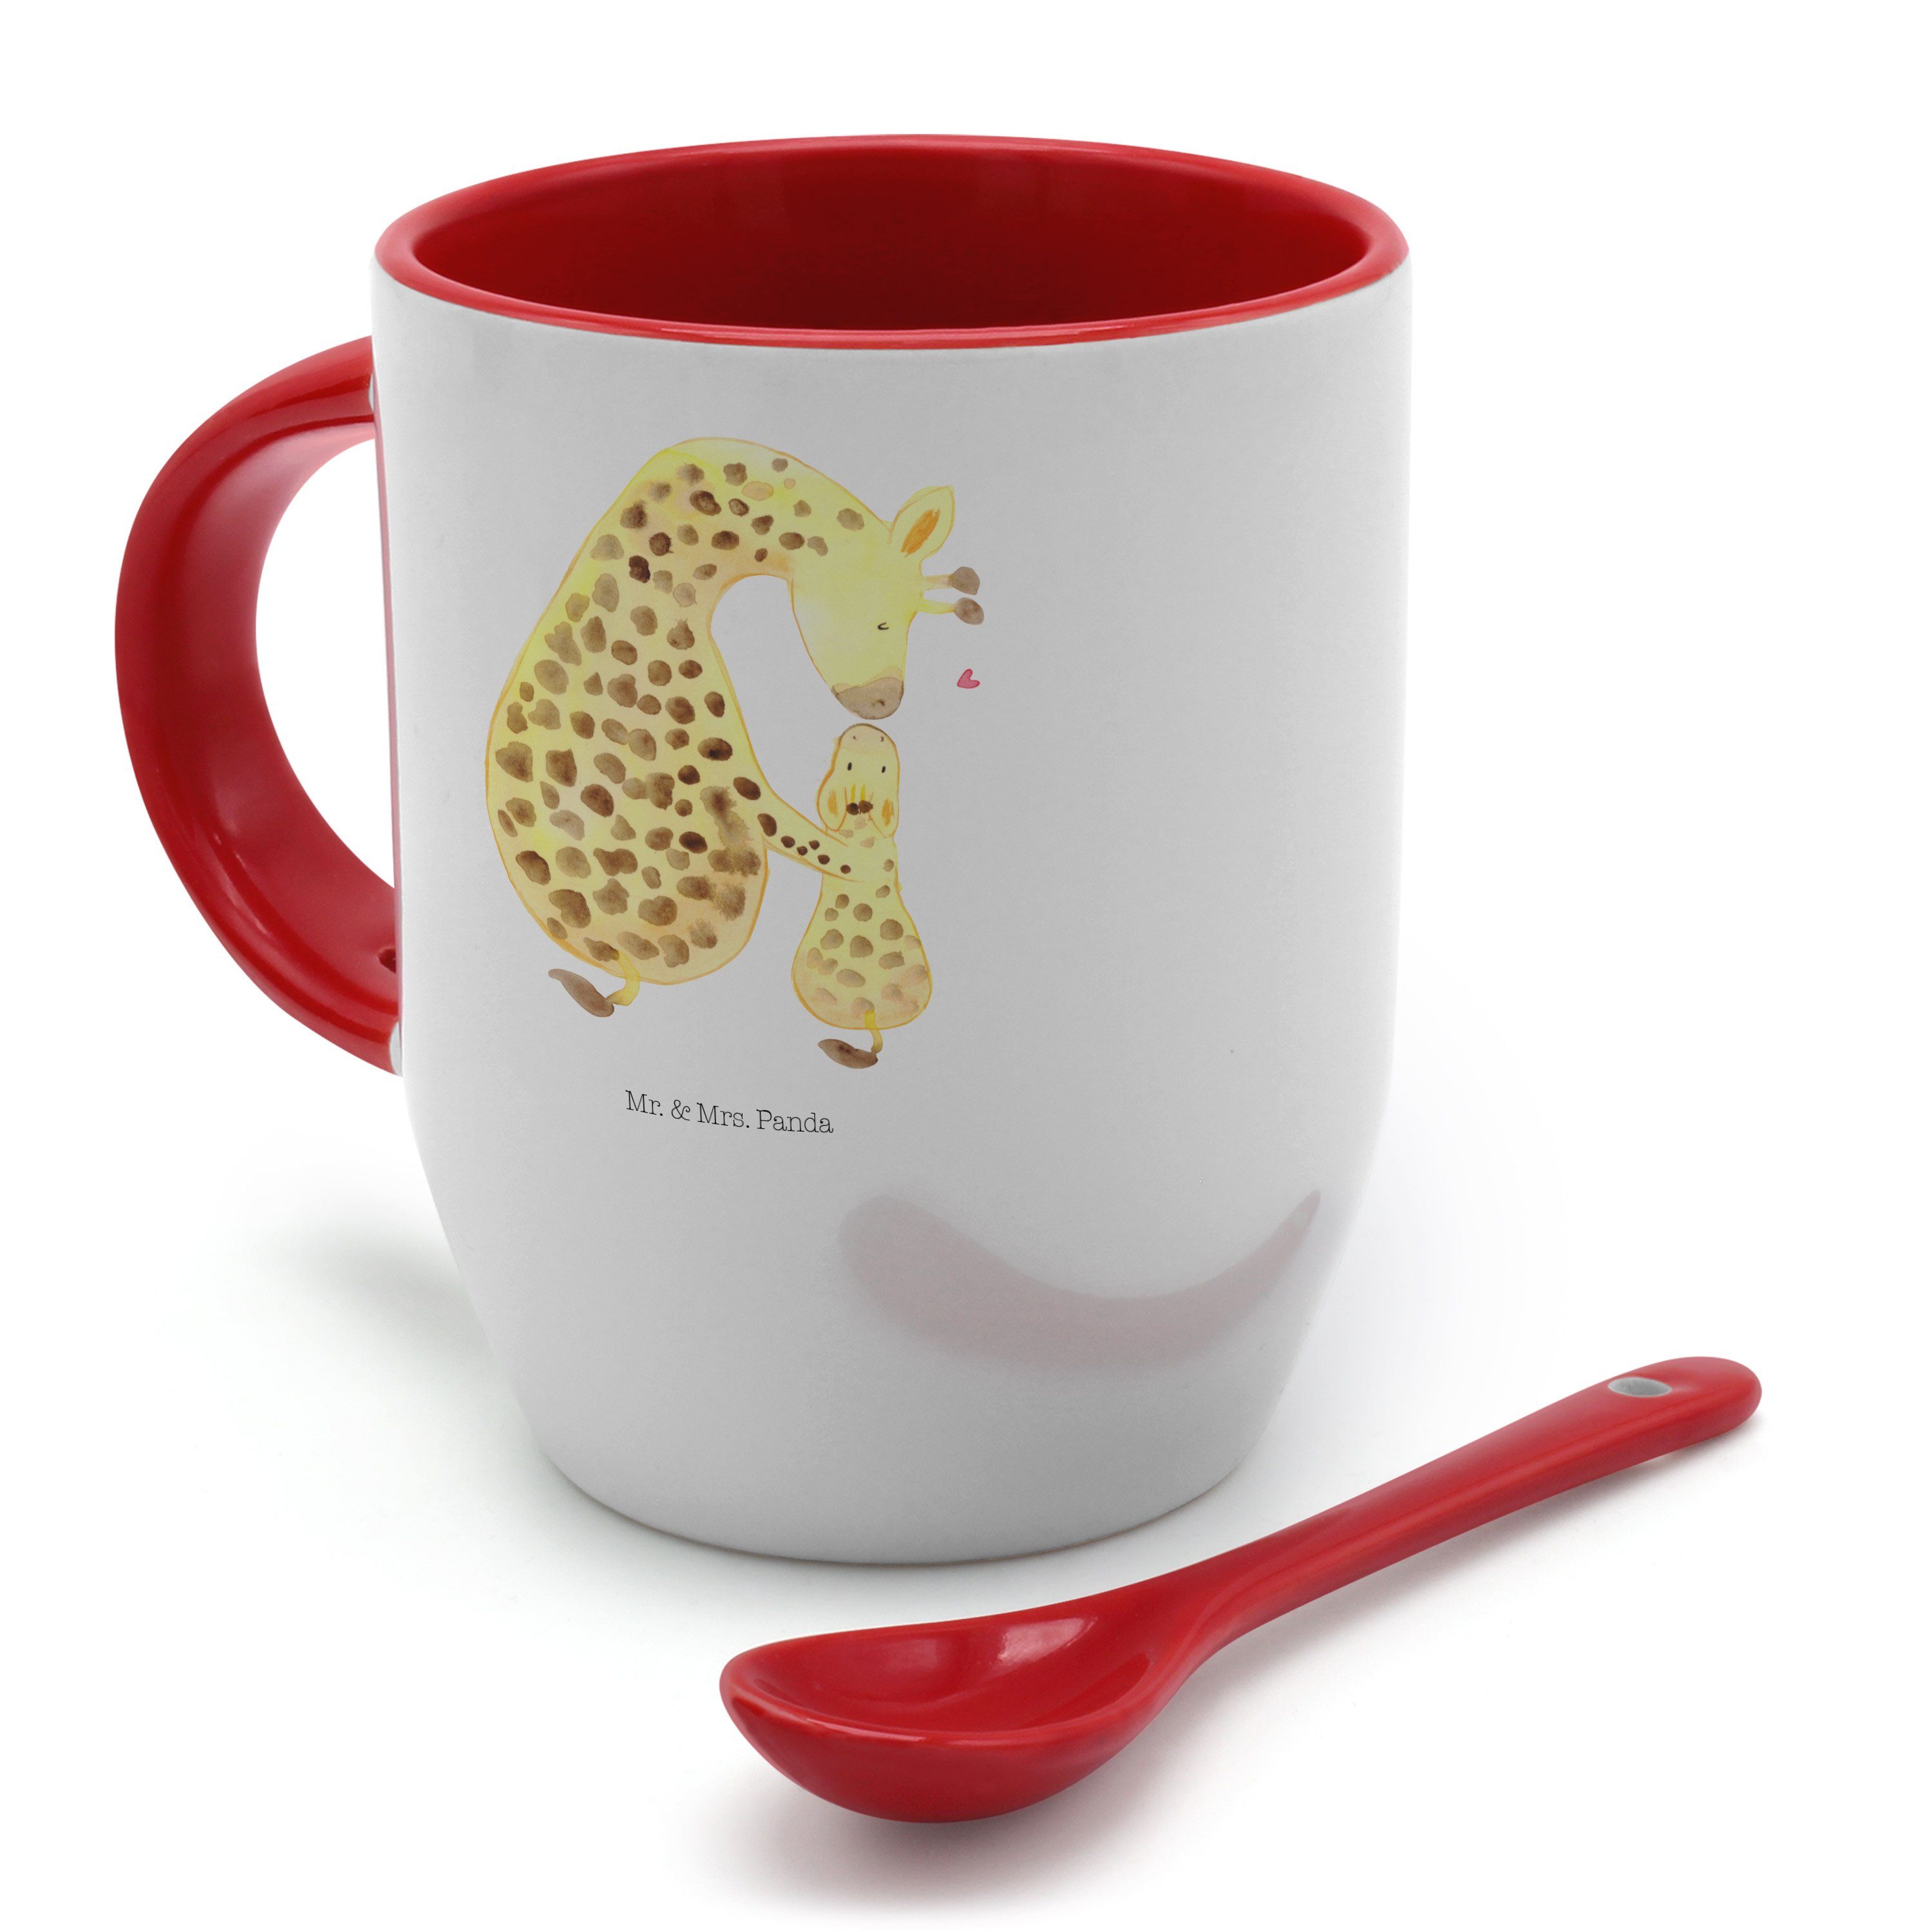 Mr. & Mrs. Panda Tasse Giraffe mit Kind - Weiß - Geschenk, Tasse, Kaffeetasse, Tochter, Kaff, Keramik